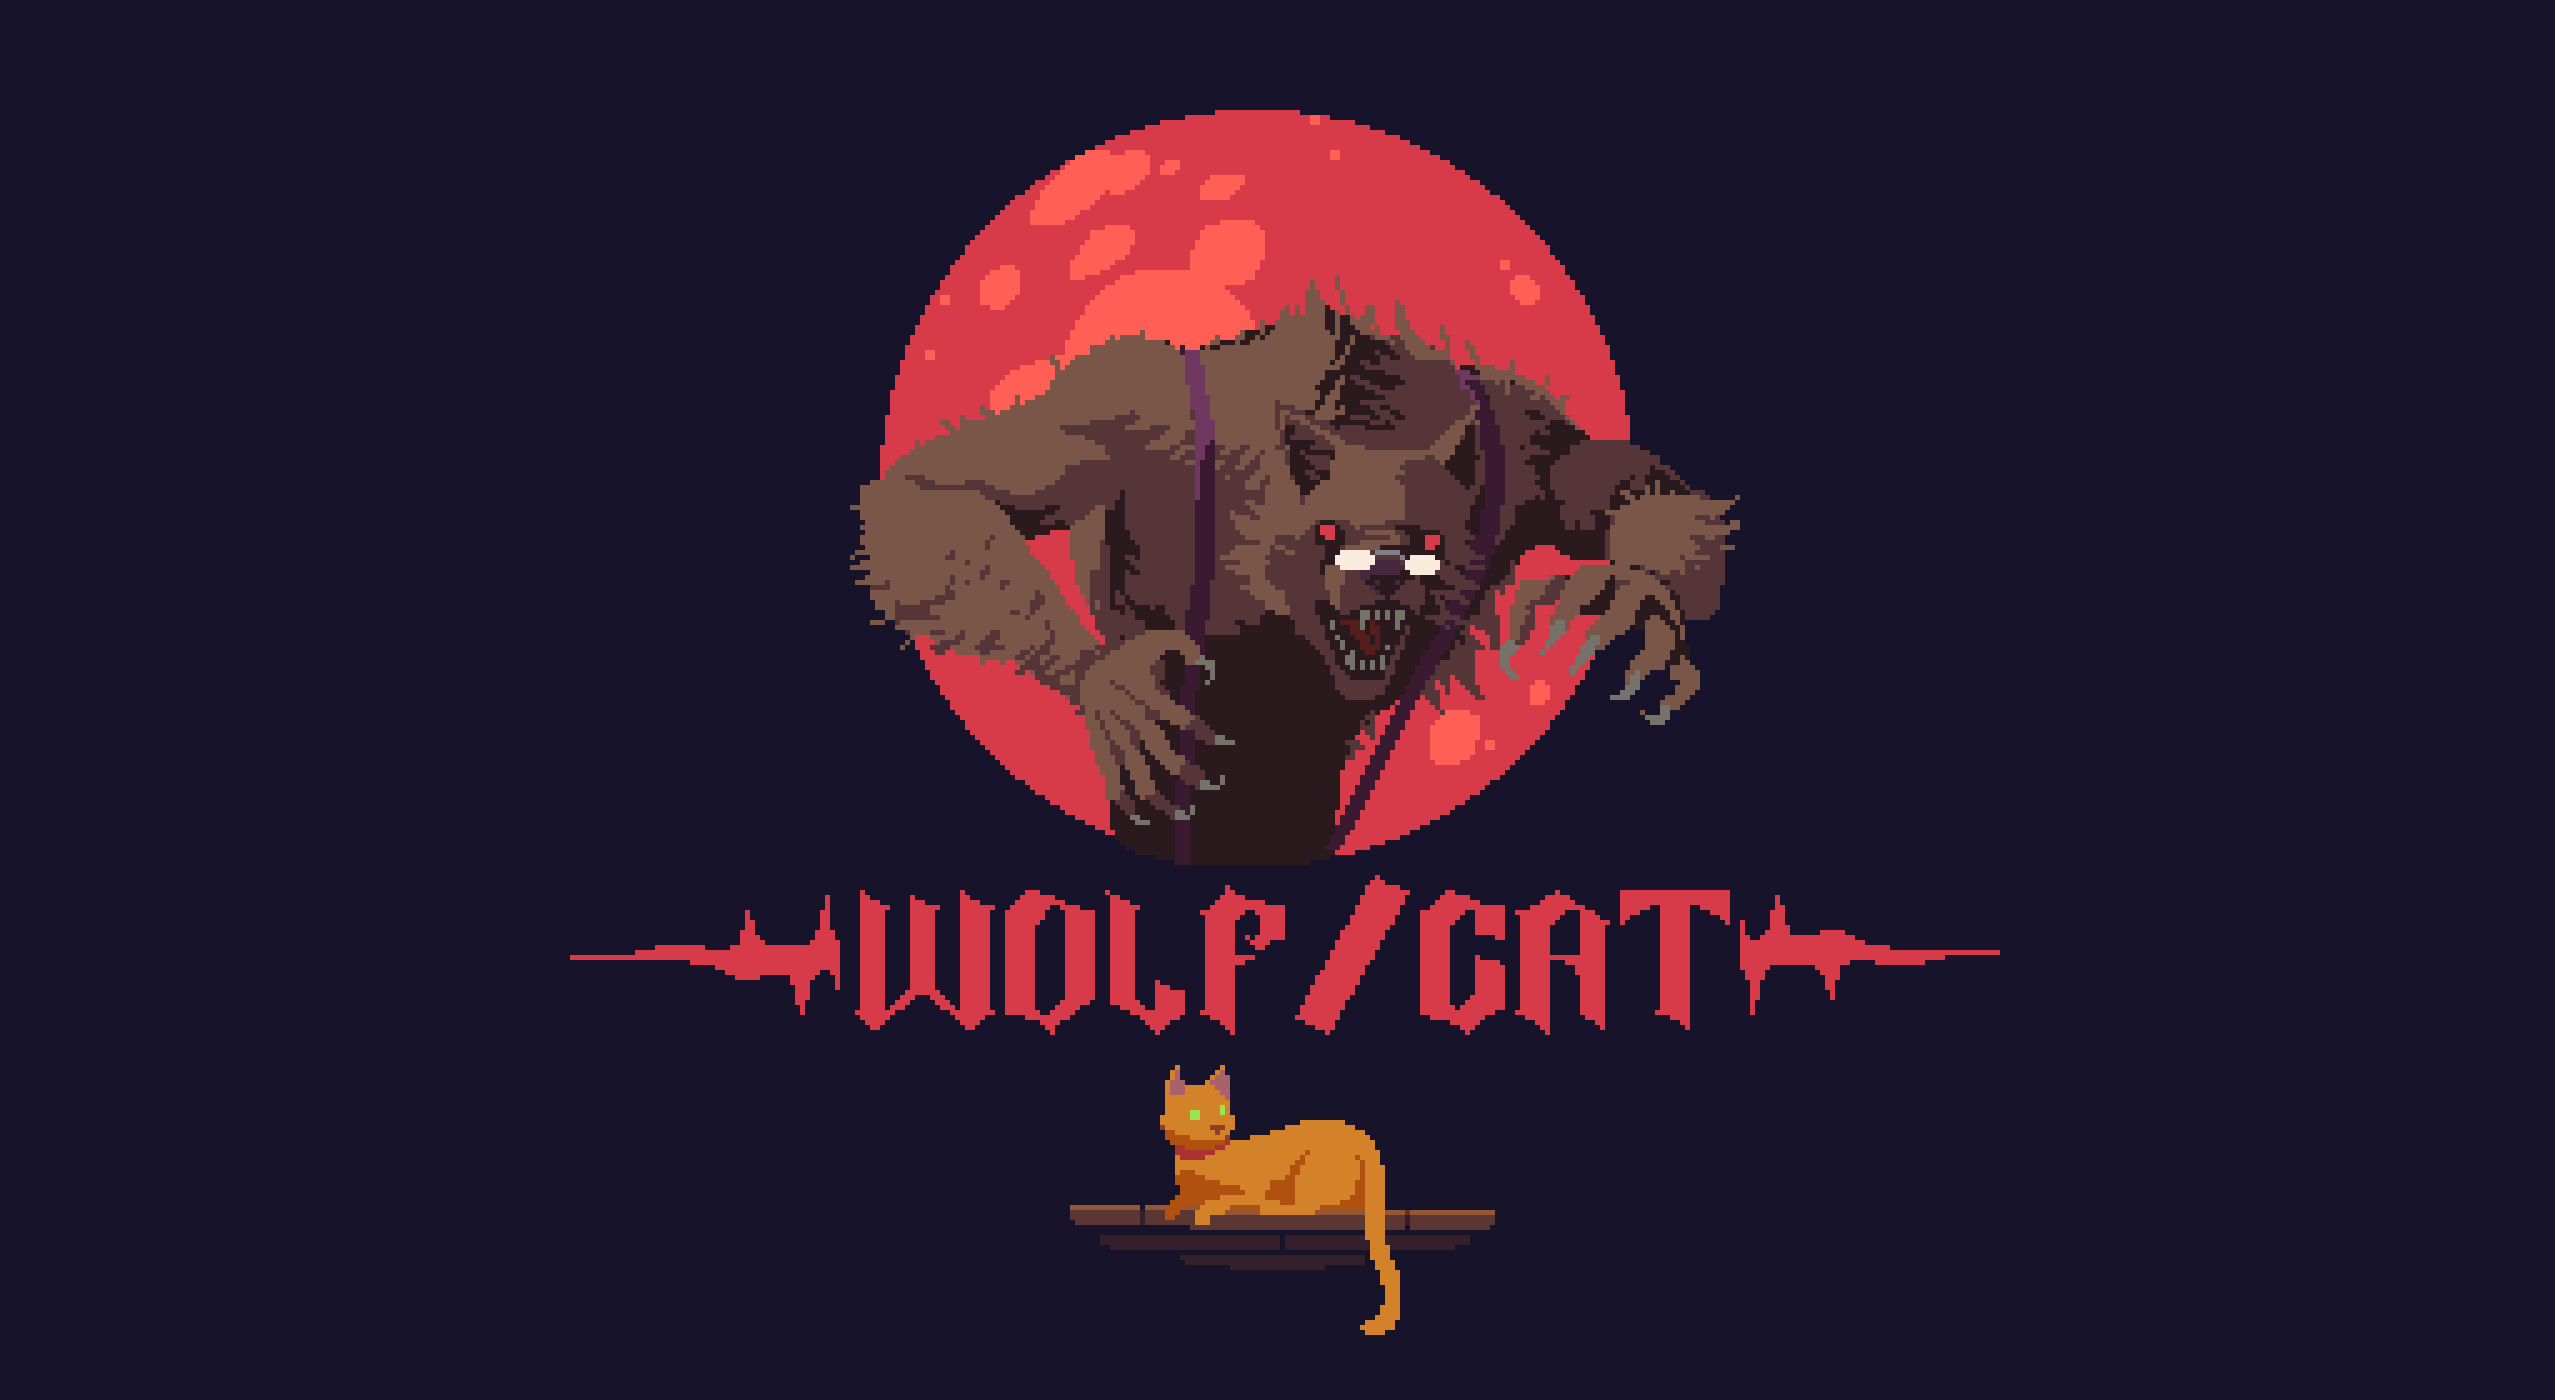 Wolf / Cat